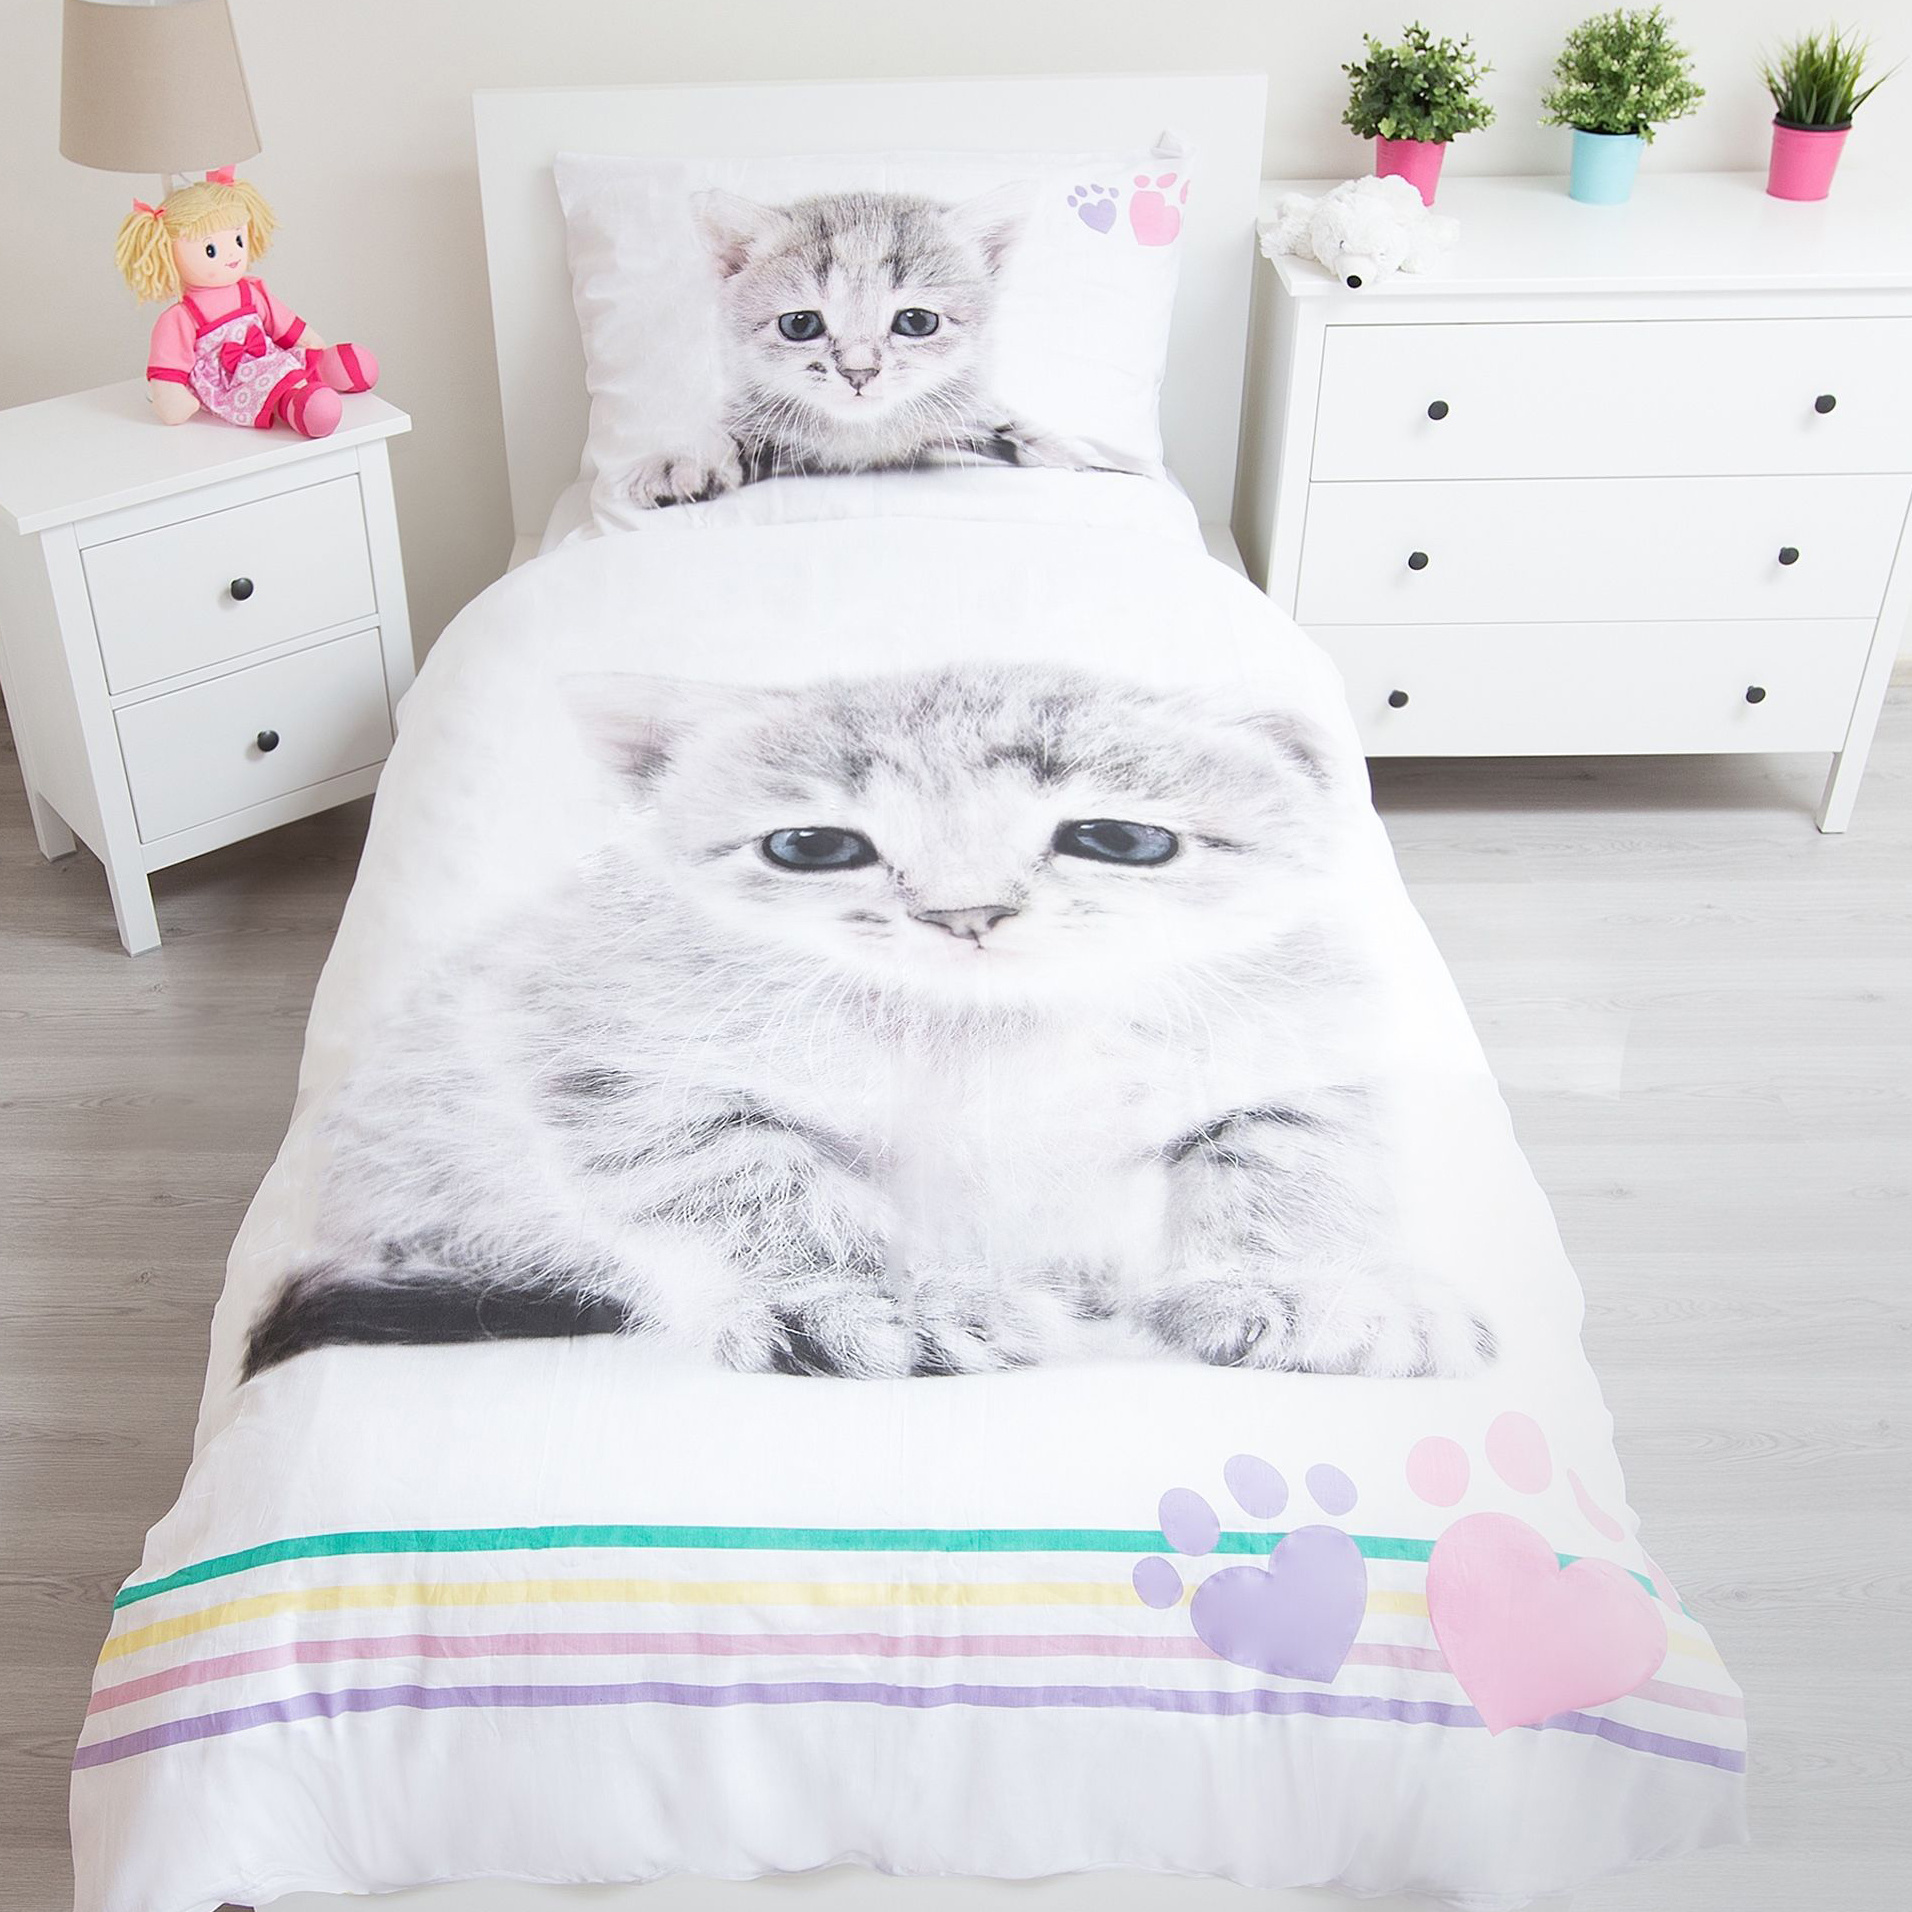 Animal Pictures Kitten Duvet cover - Single - 140 x 200 cm - Cotton